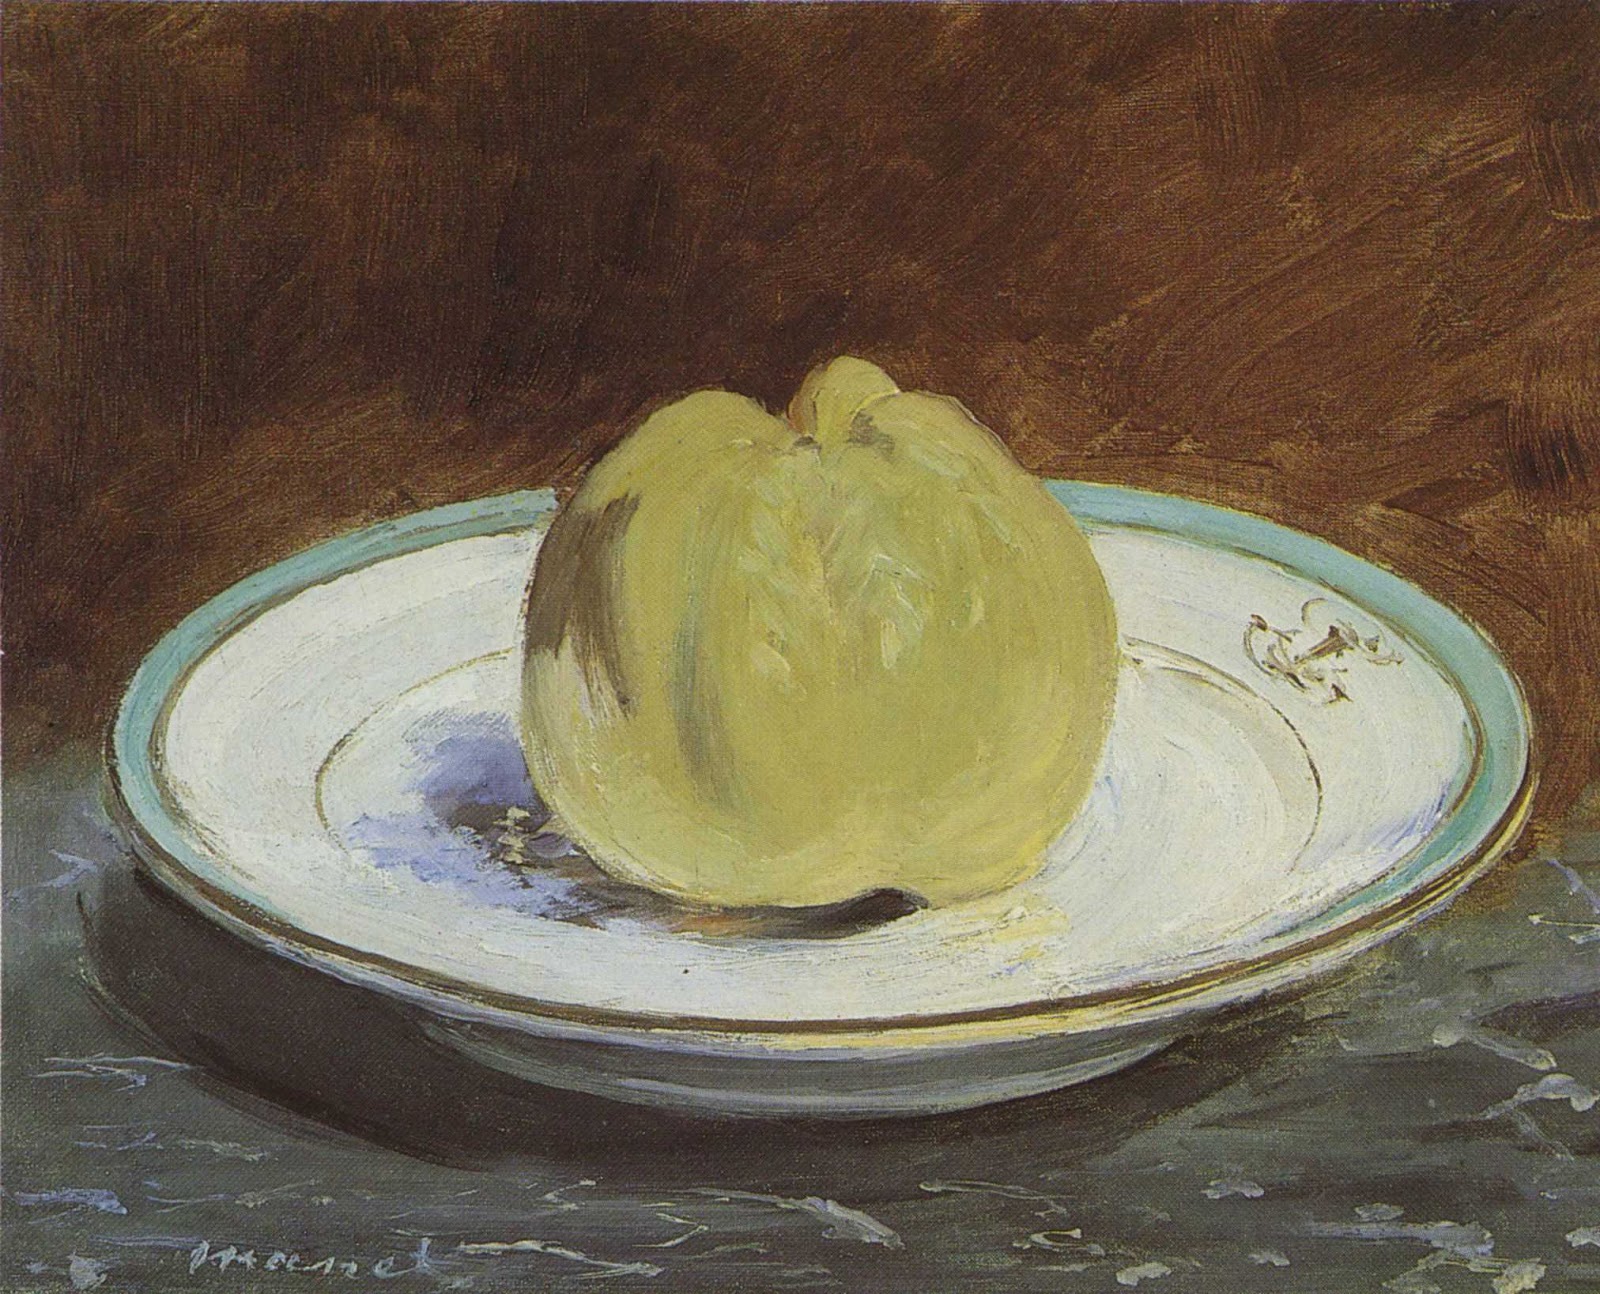 Edouard+Manet-1832-1883 (139).jpg